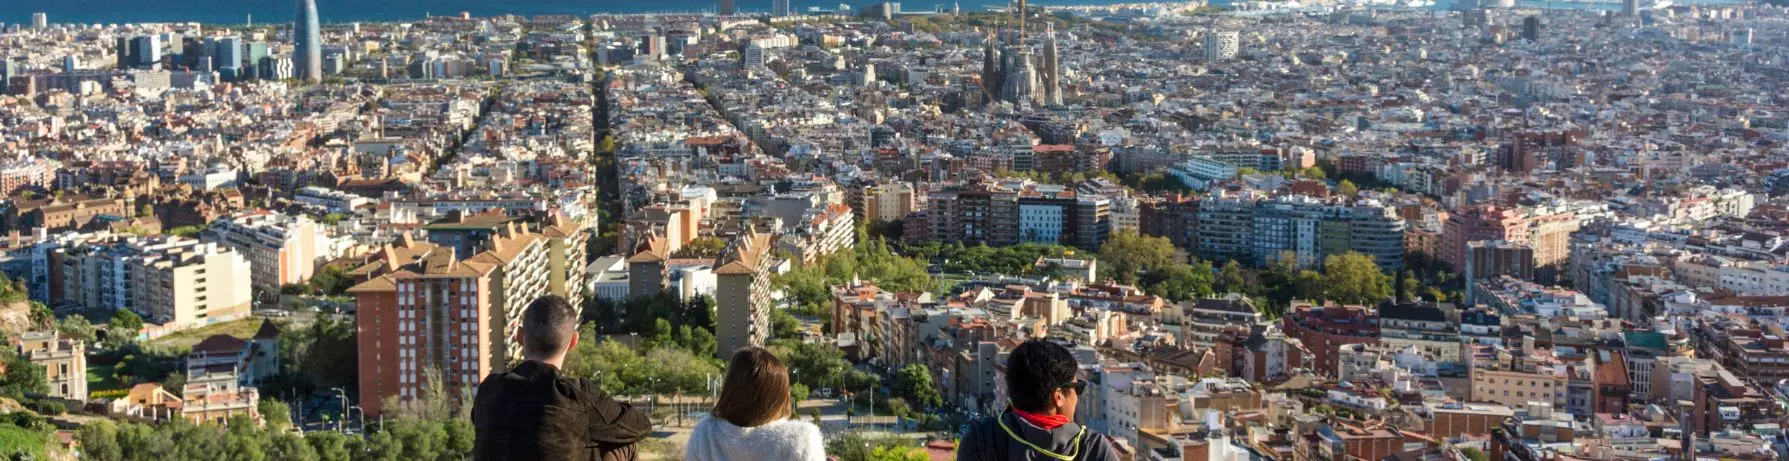 The Bunkers del Carmel : the hidden best viewpoint in Barcelona